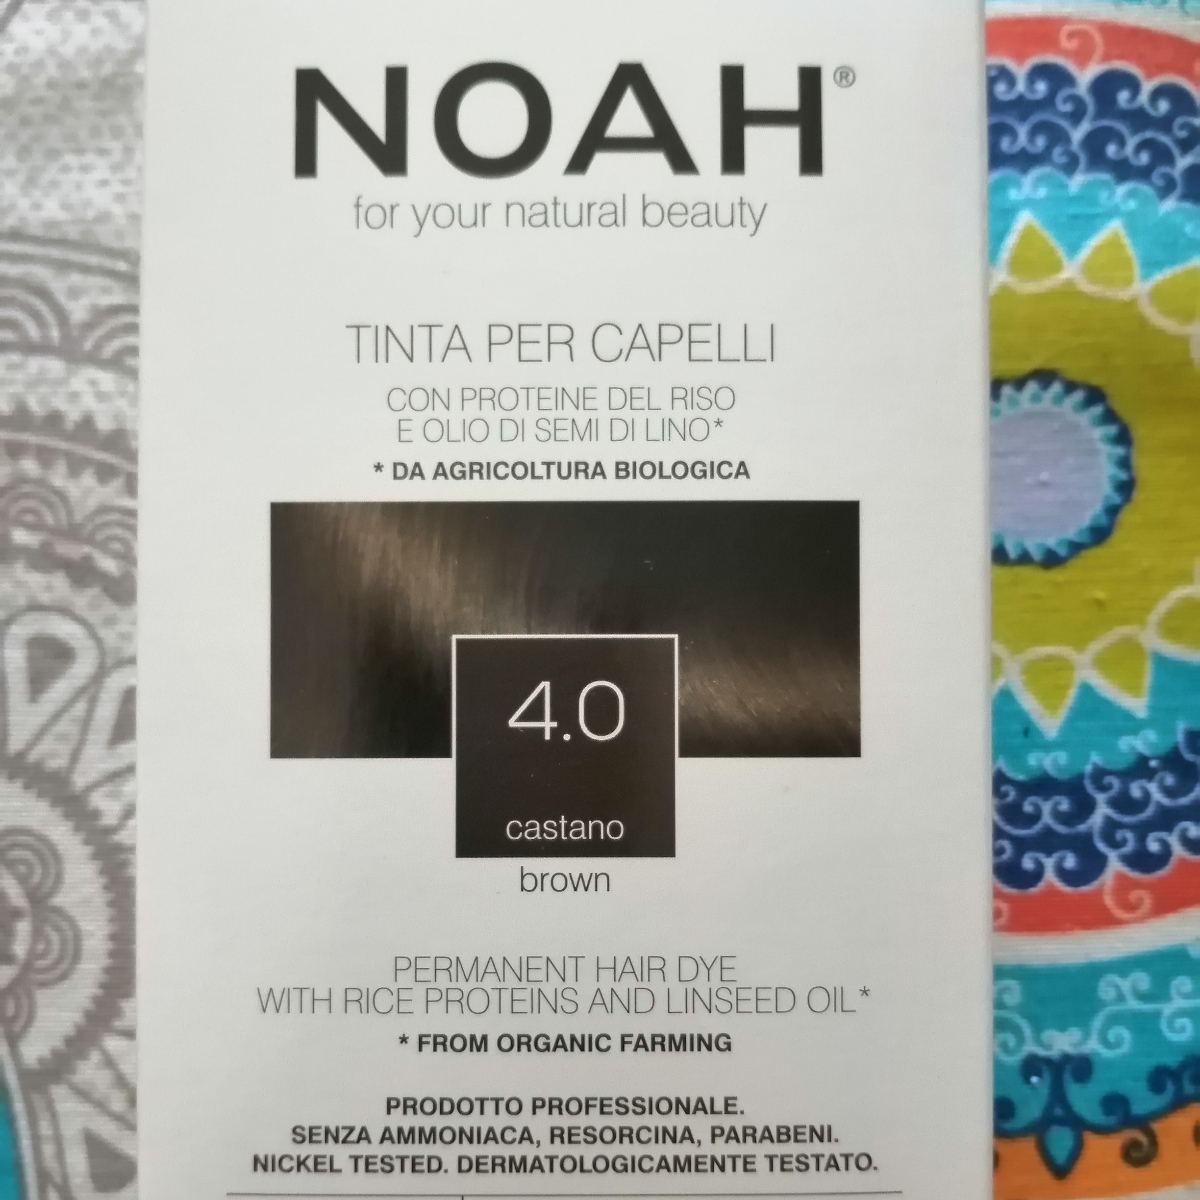 NOAH Tinta per capelli. Vegan Reviews | abillion